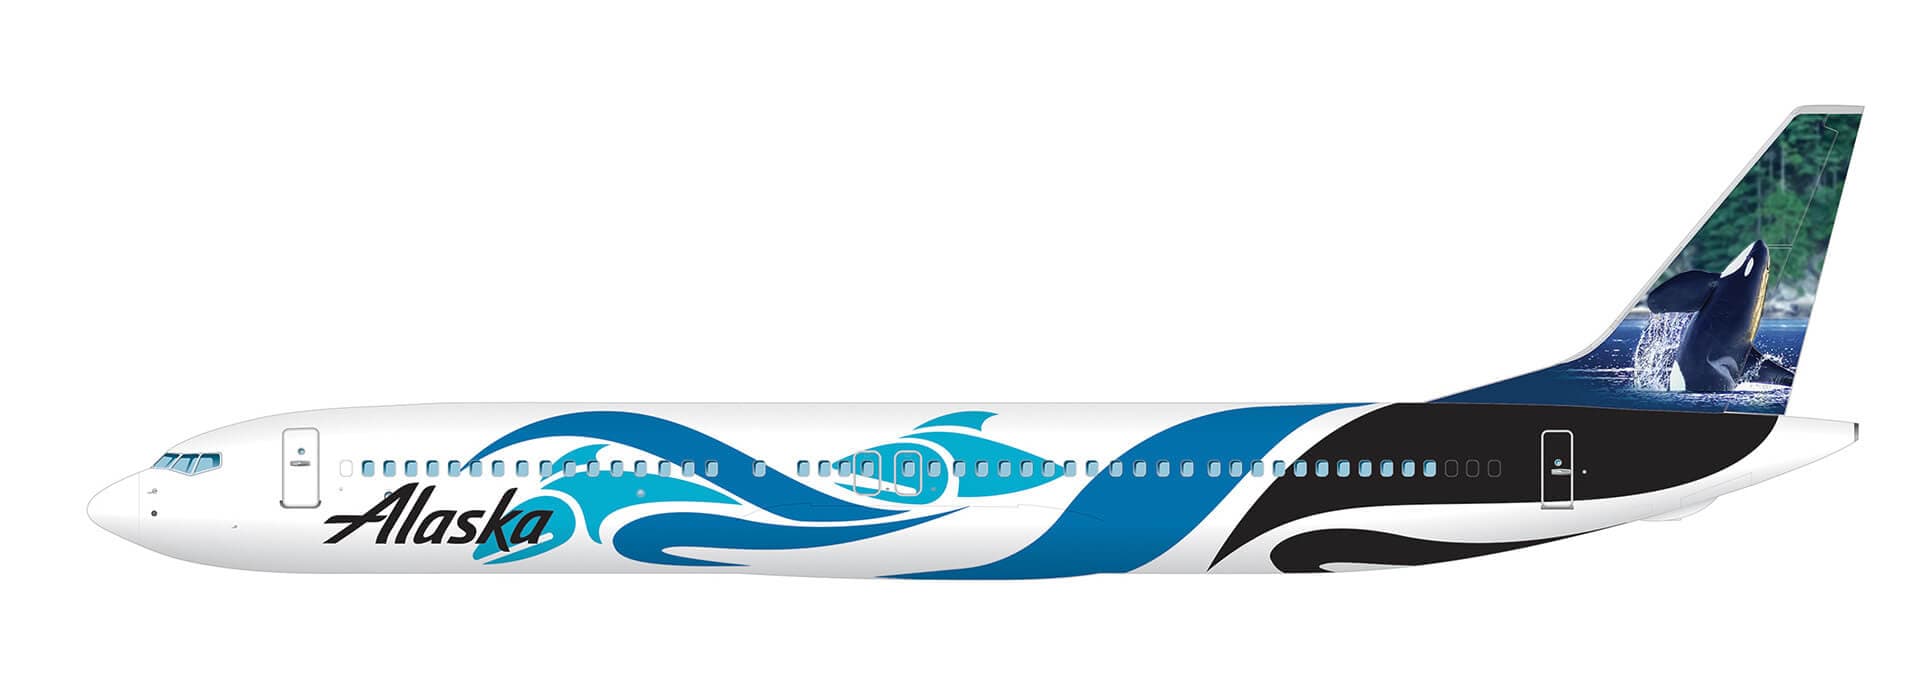 Alaska Airlines 737 orca livery design concept tribal